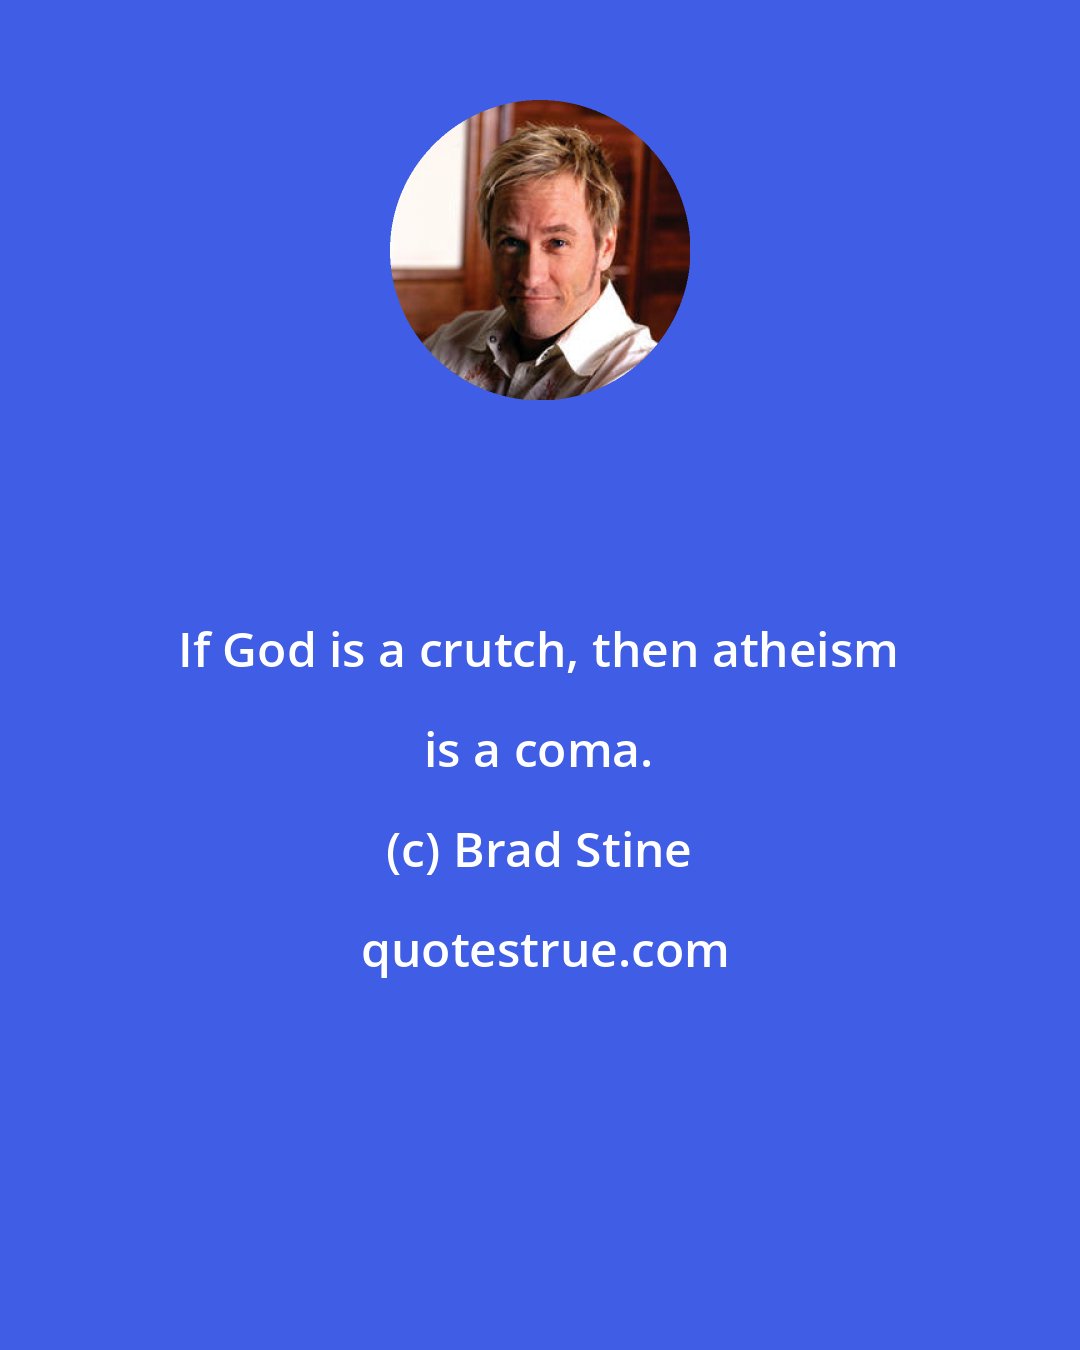 Brad Stine: If God is a crutch, then atheism is a coma.